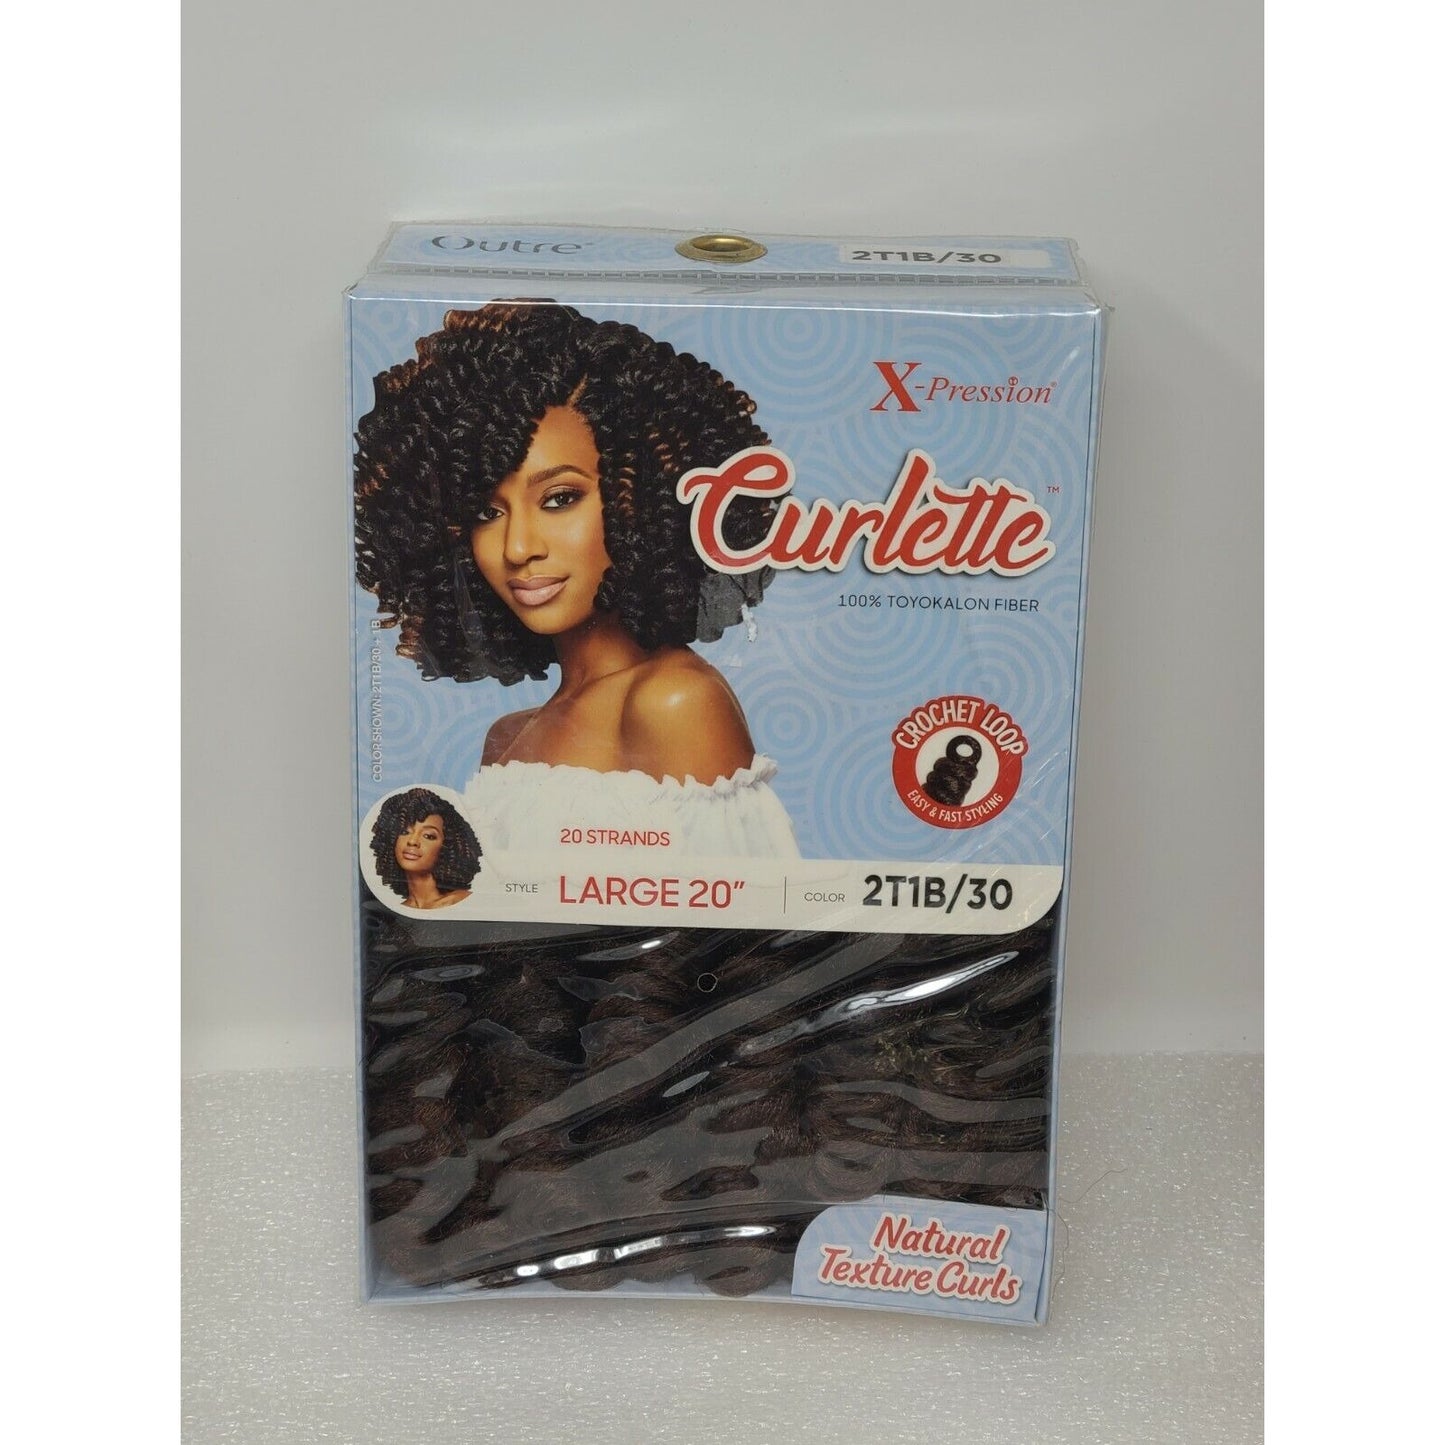 X-Pression Curlette Toyokalon Fiber Large 20" Hair Strands 2T1B/30 Natural